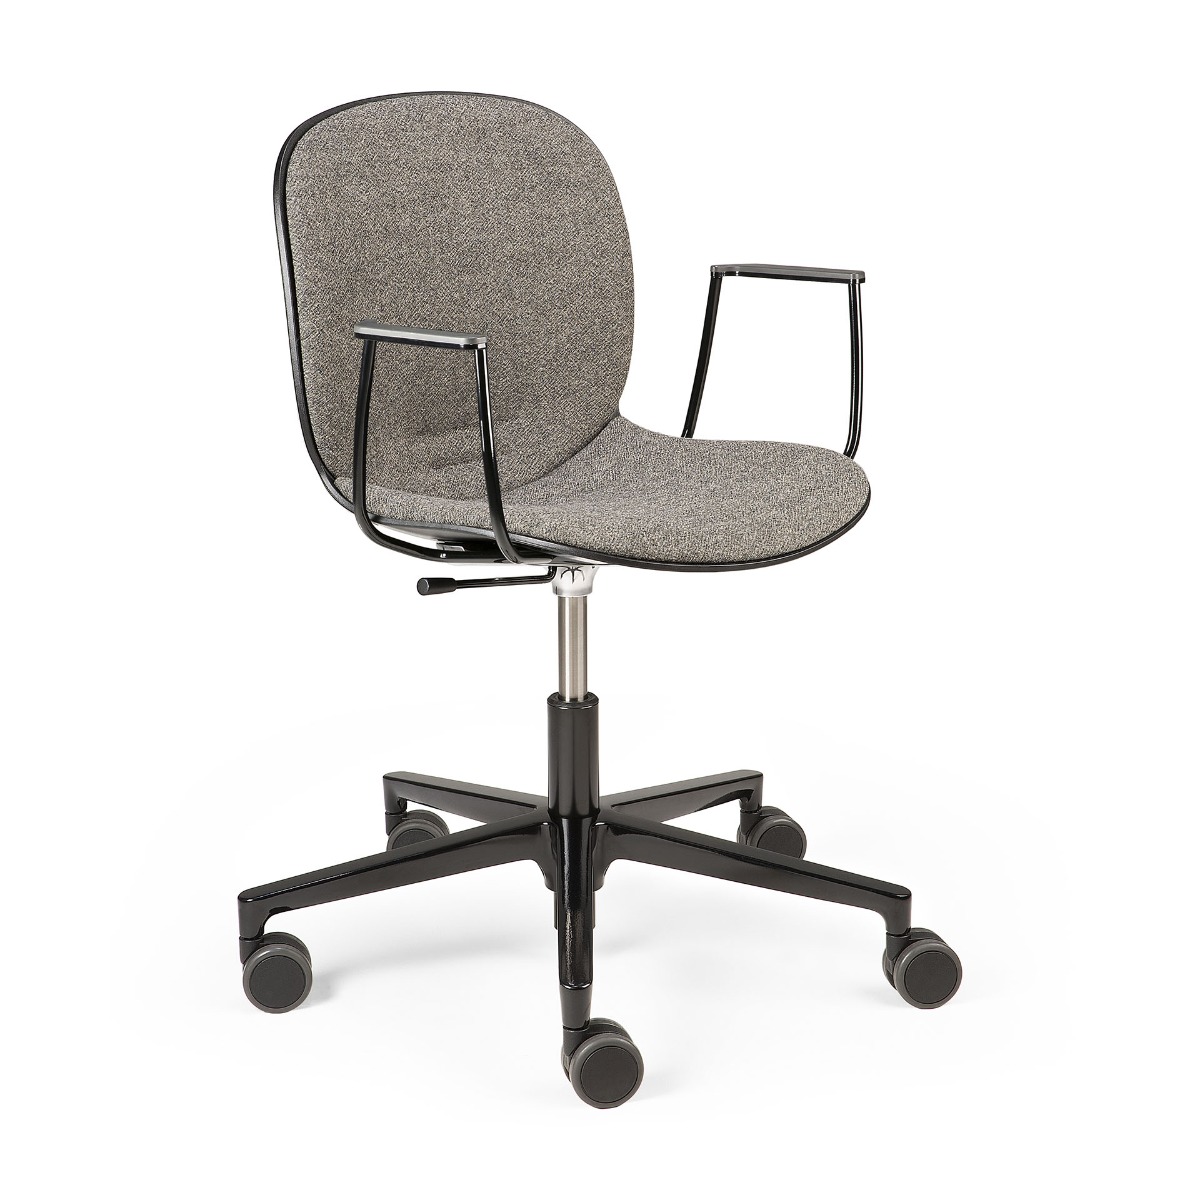 RBM Noor office chair in grey